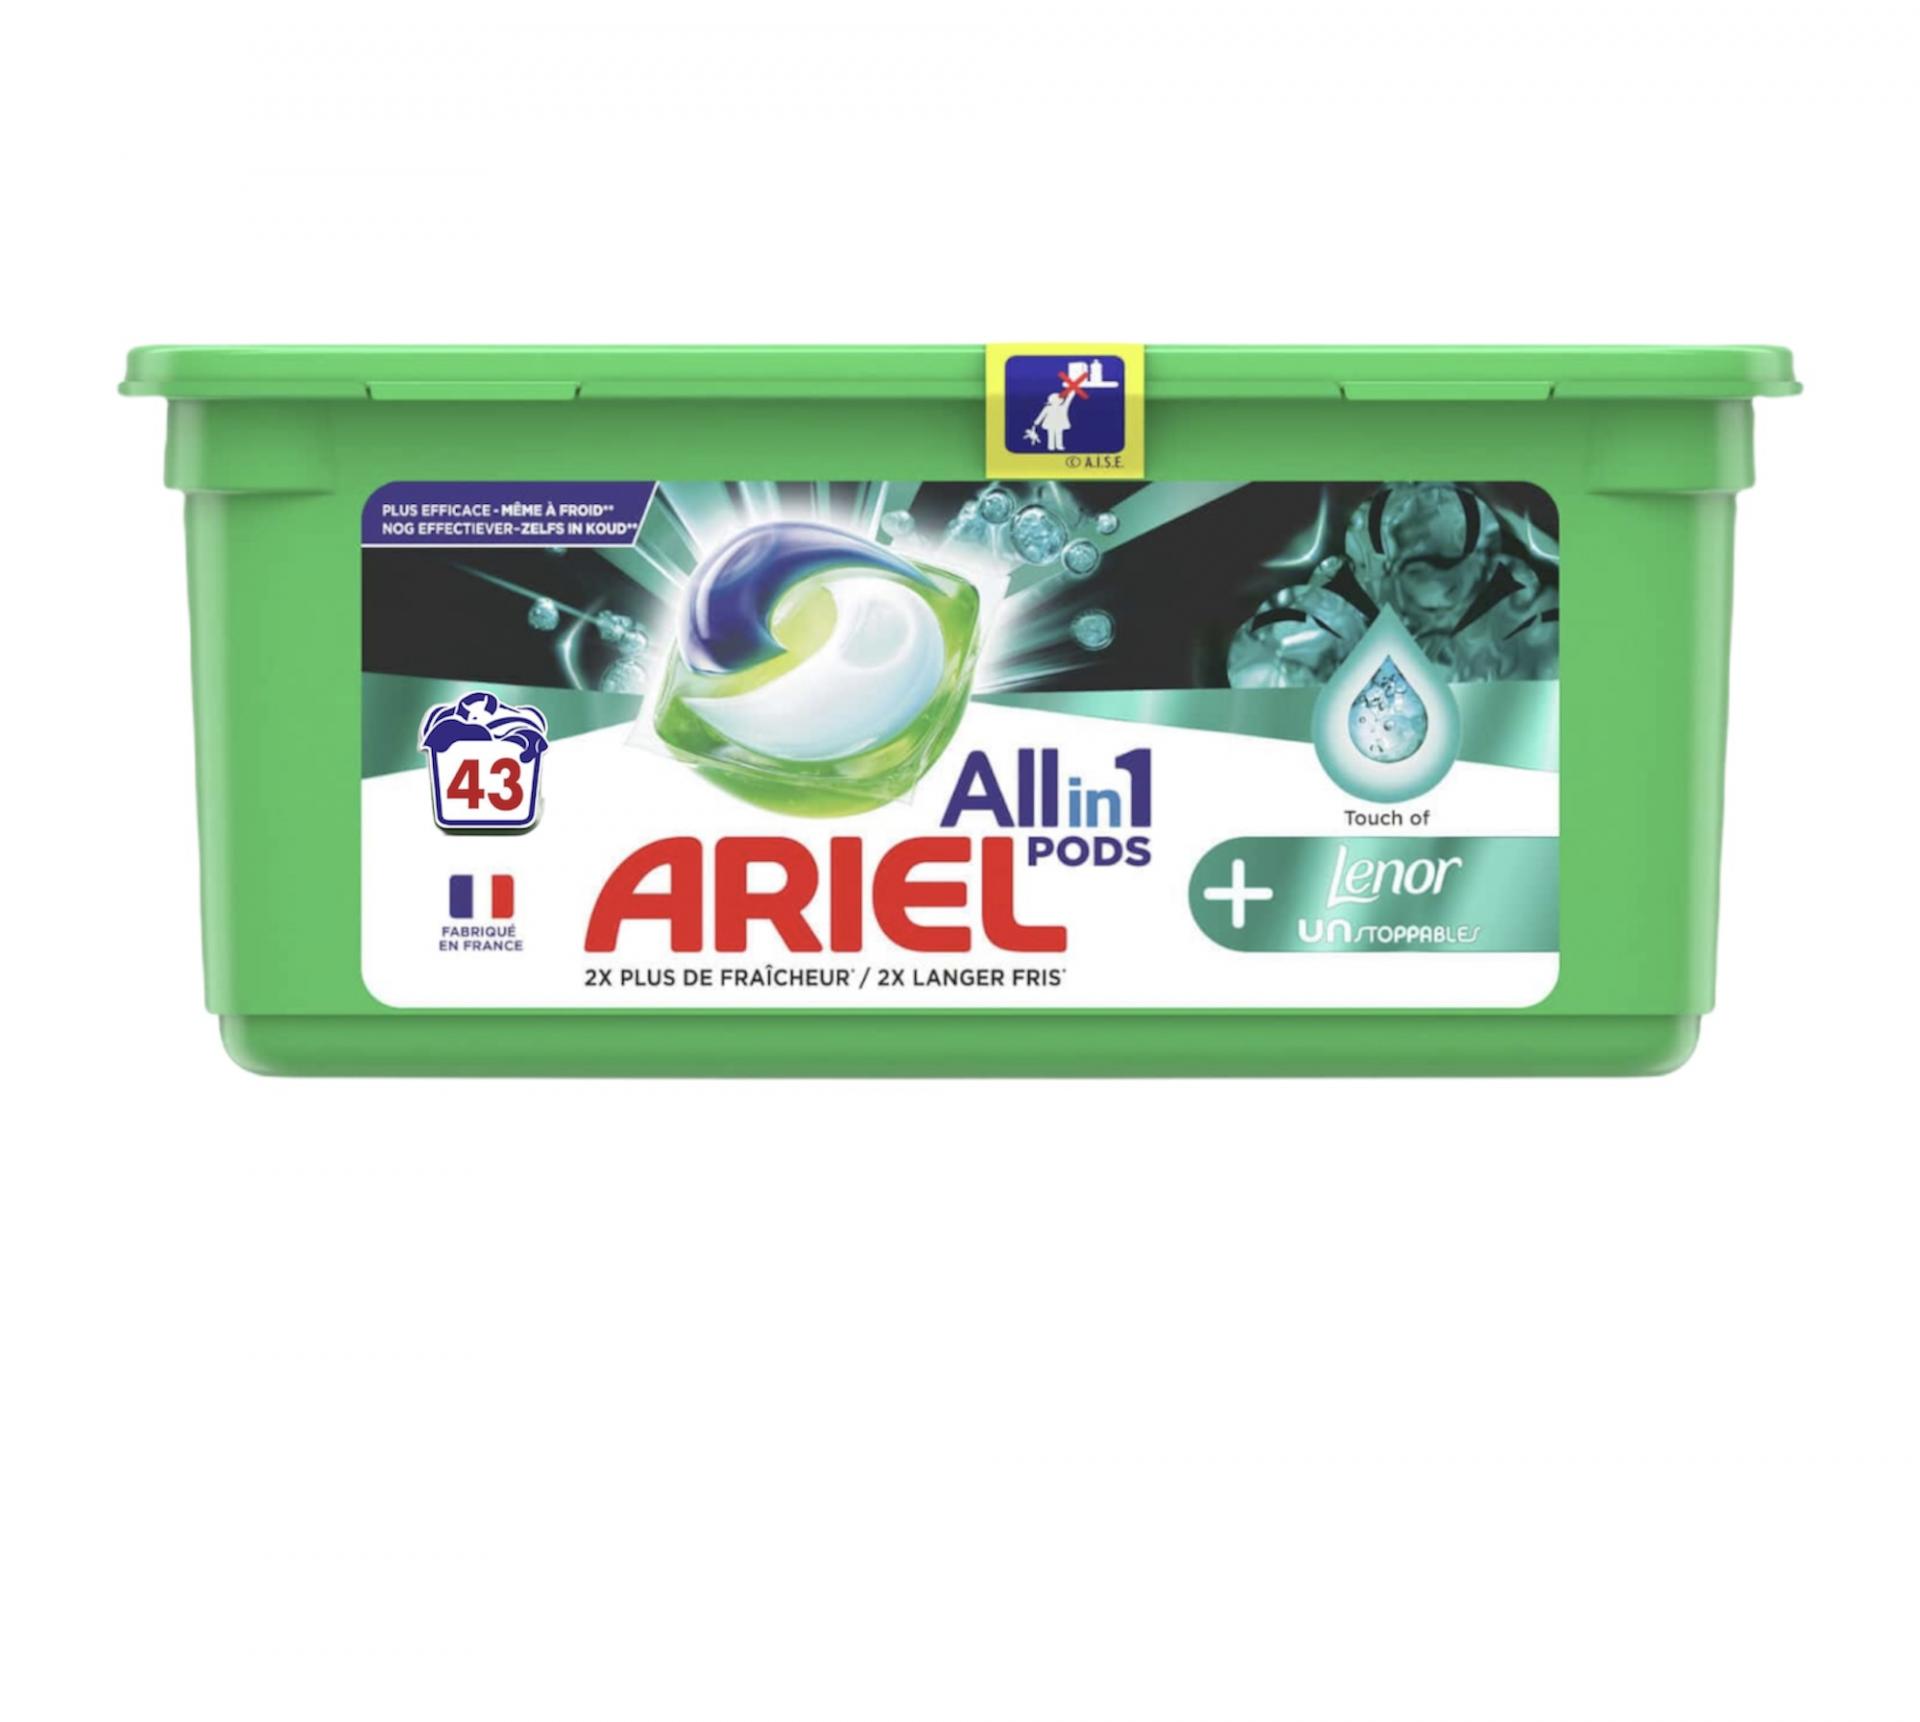 Vente en gros Ariel 45 capsules lessive pods